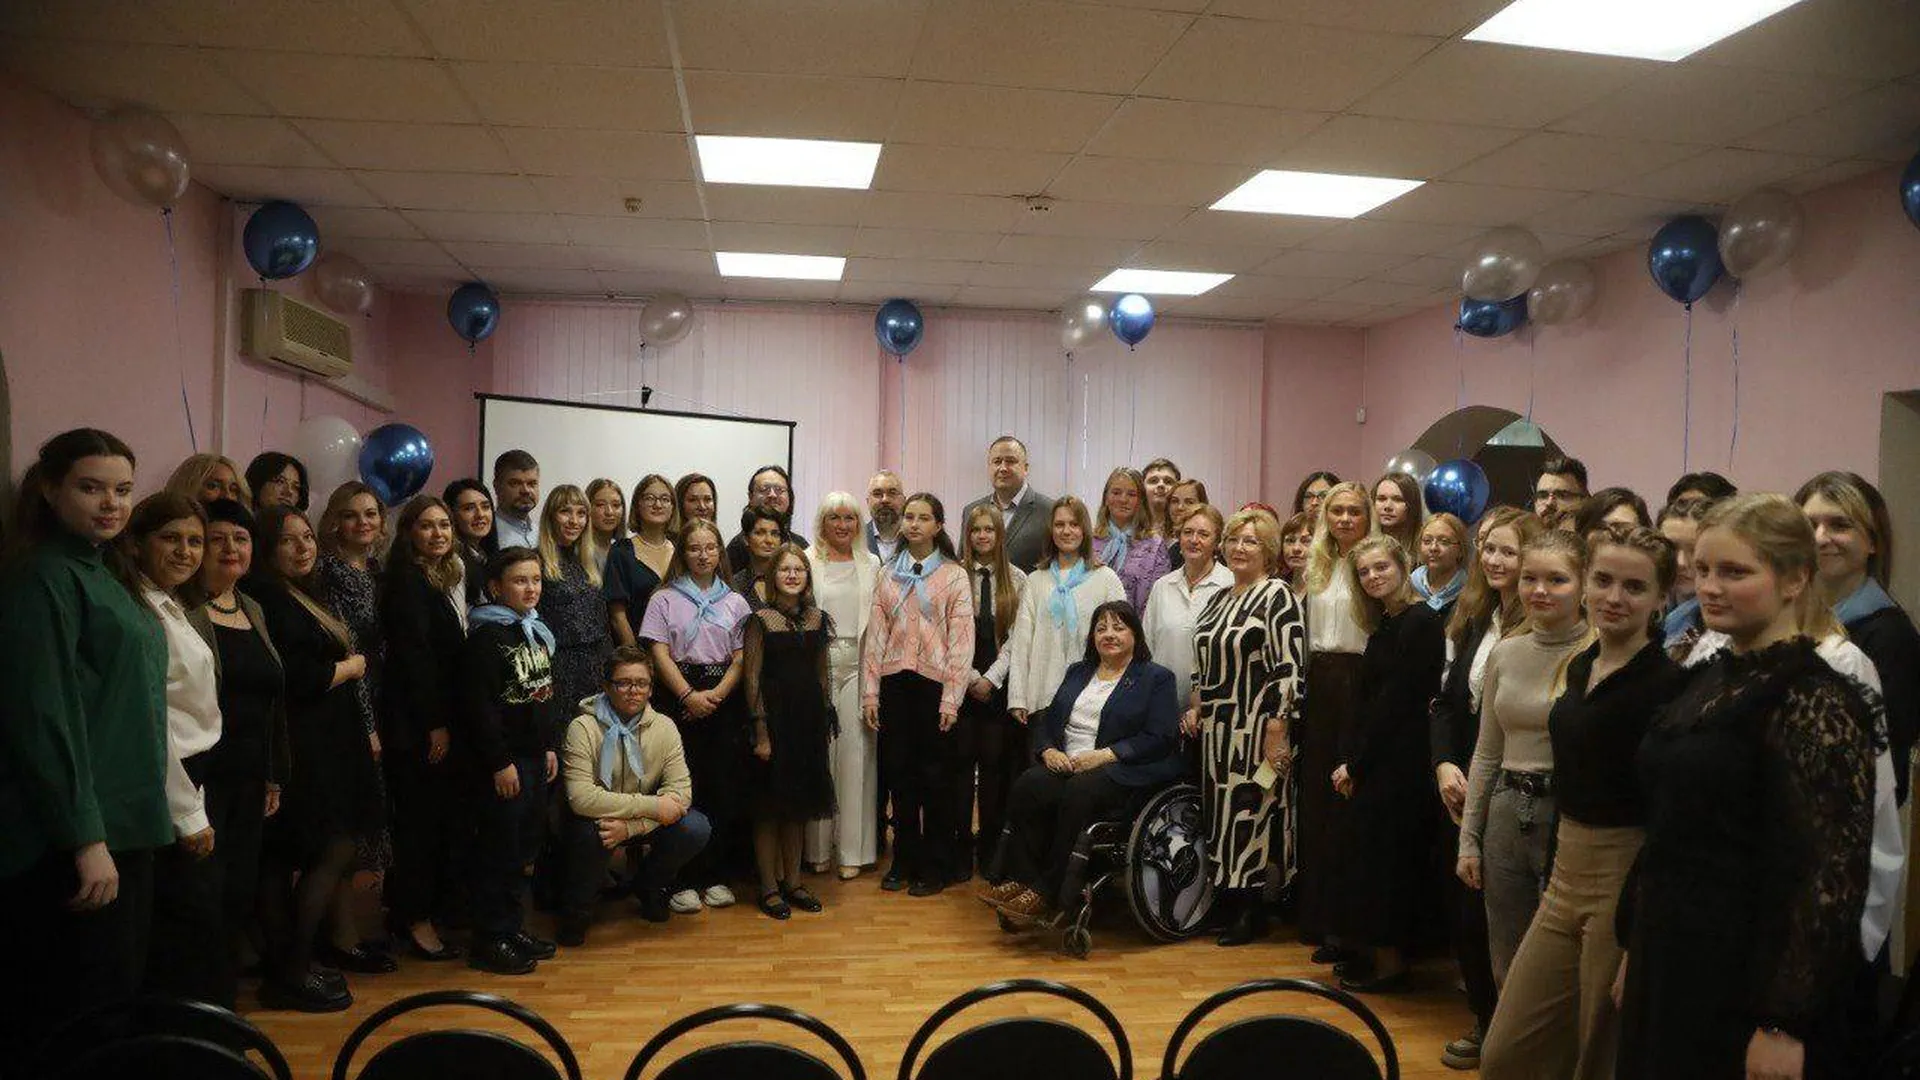 Глава Серпухова поздравил коллектив Центра по профориентации и трудоустройству молодежи с юбилеем